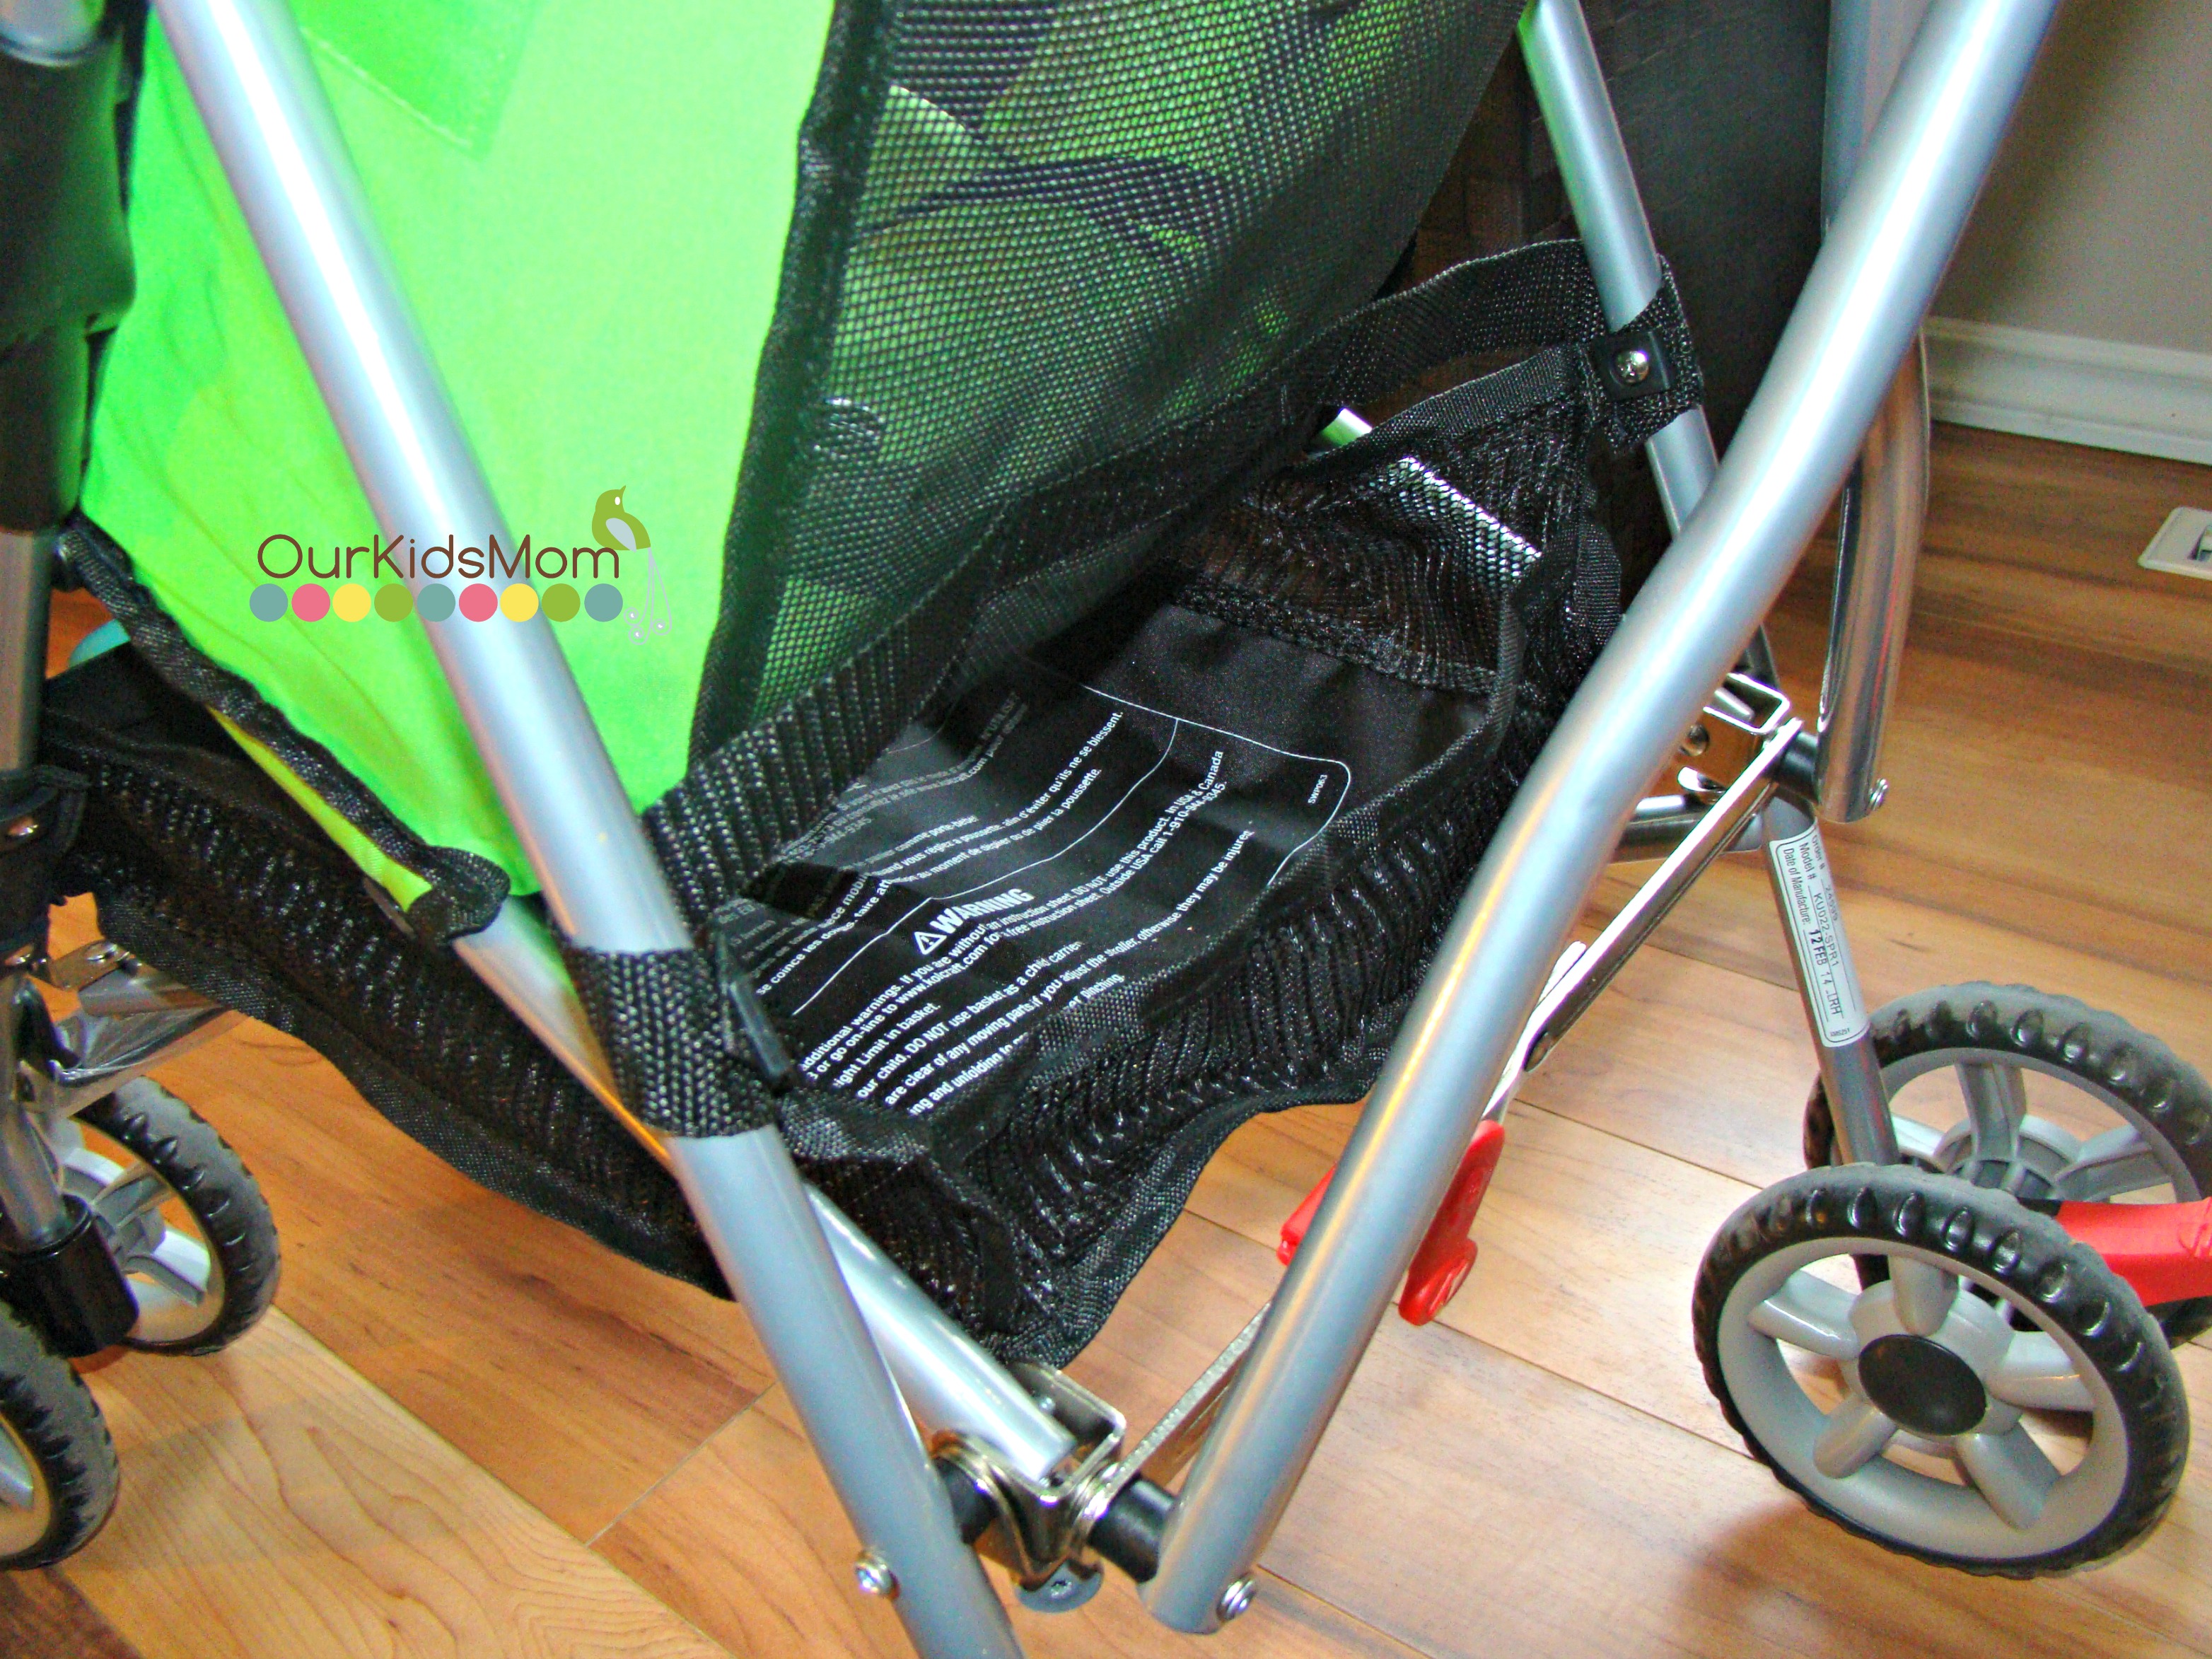 kolcraft cloud umbrella stroller assembly